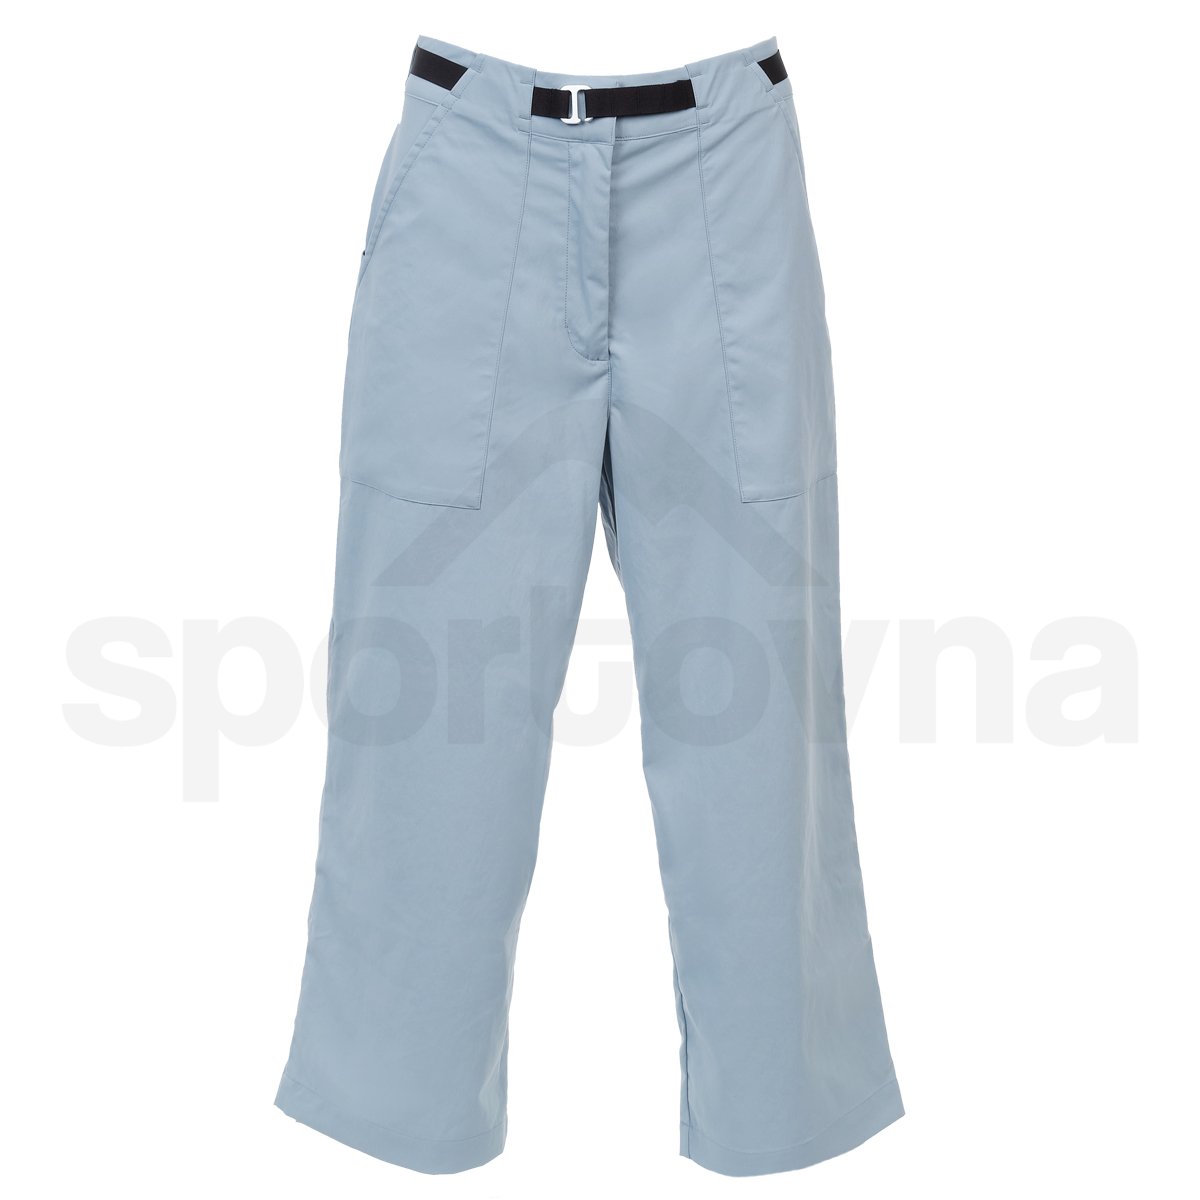 Kalhoty Salomon Outrack High Pants W - modrá